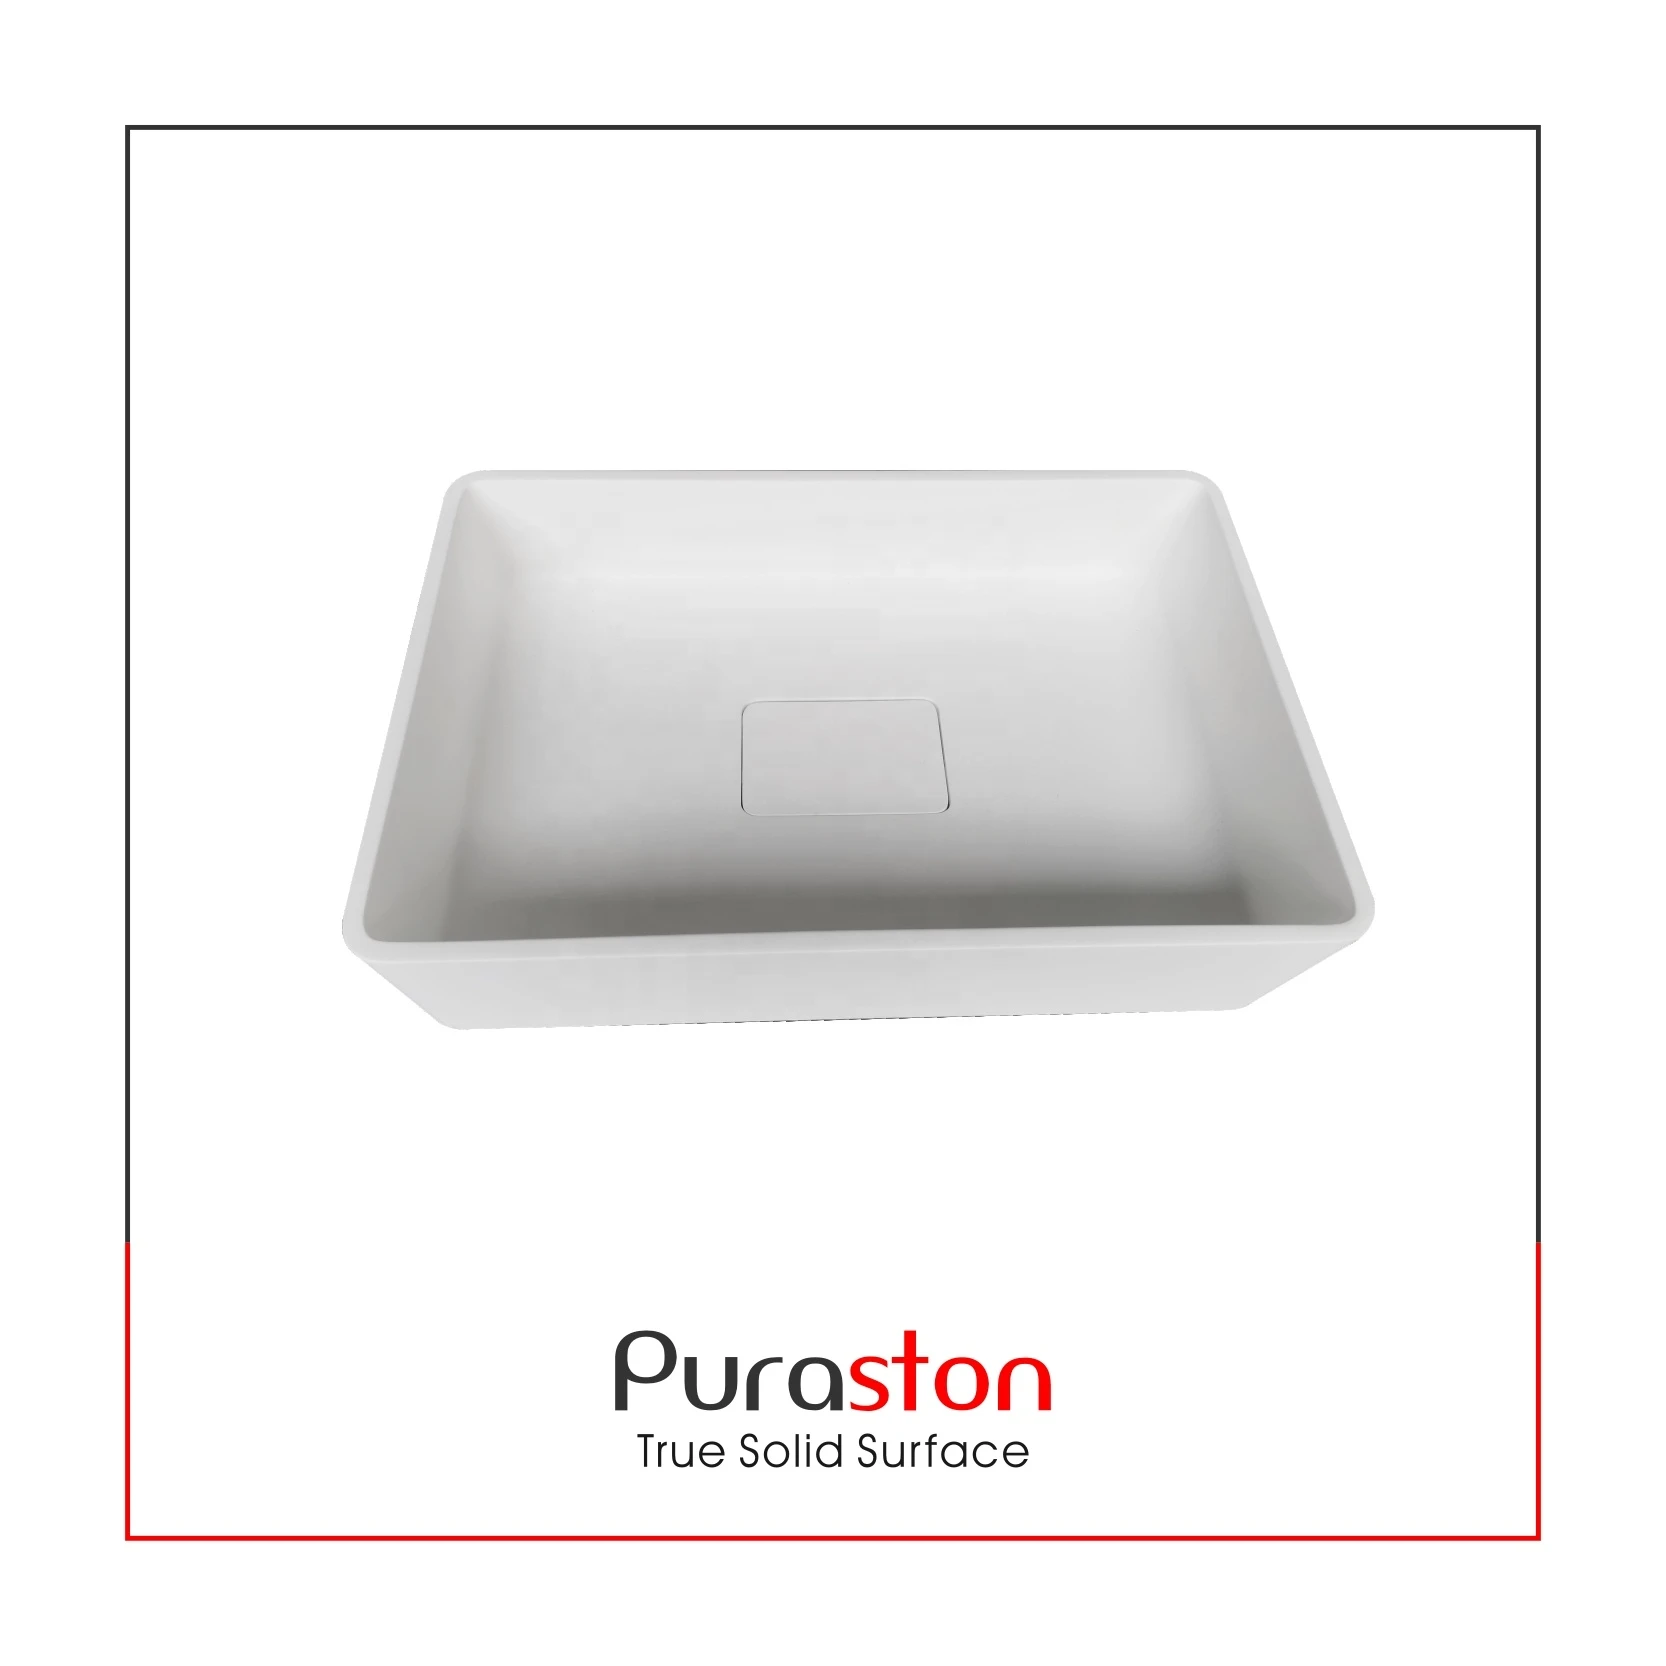 Puraston 20 inch rectangular solid surface sanitary bathroom sink